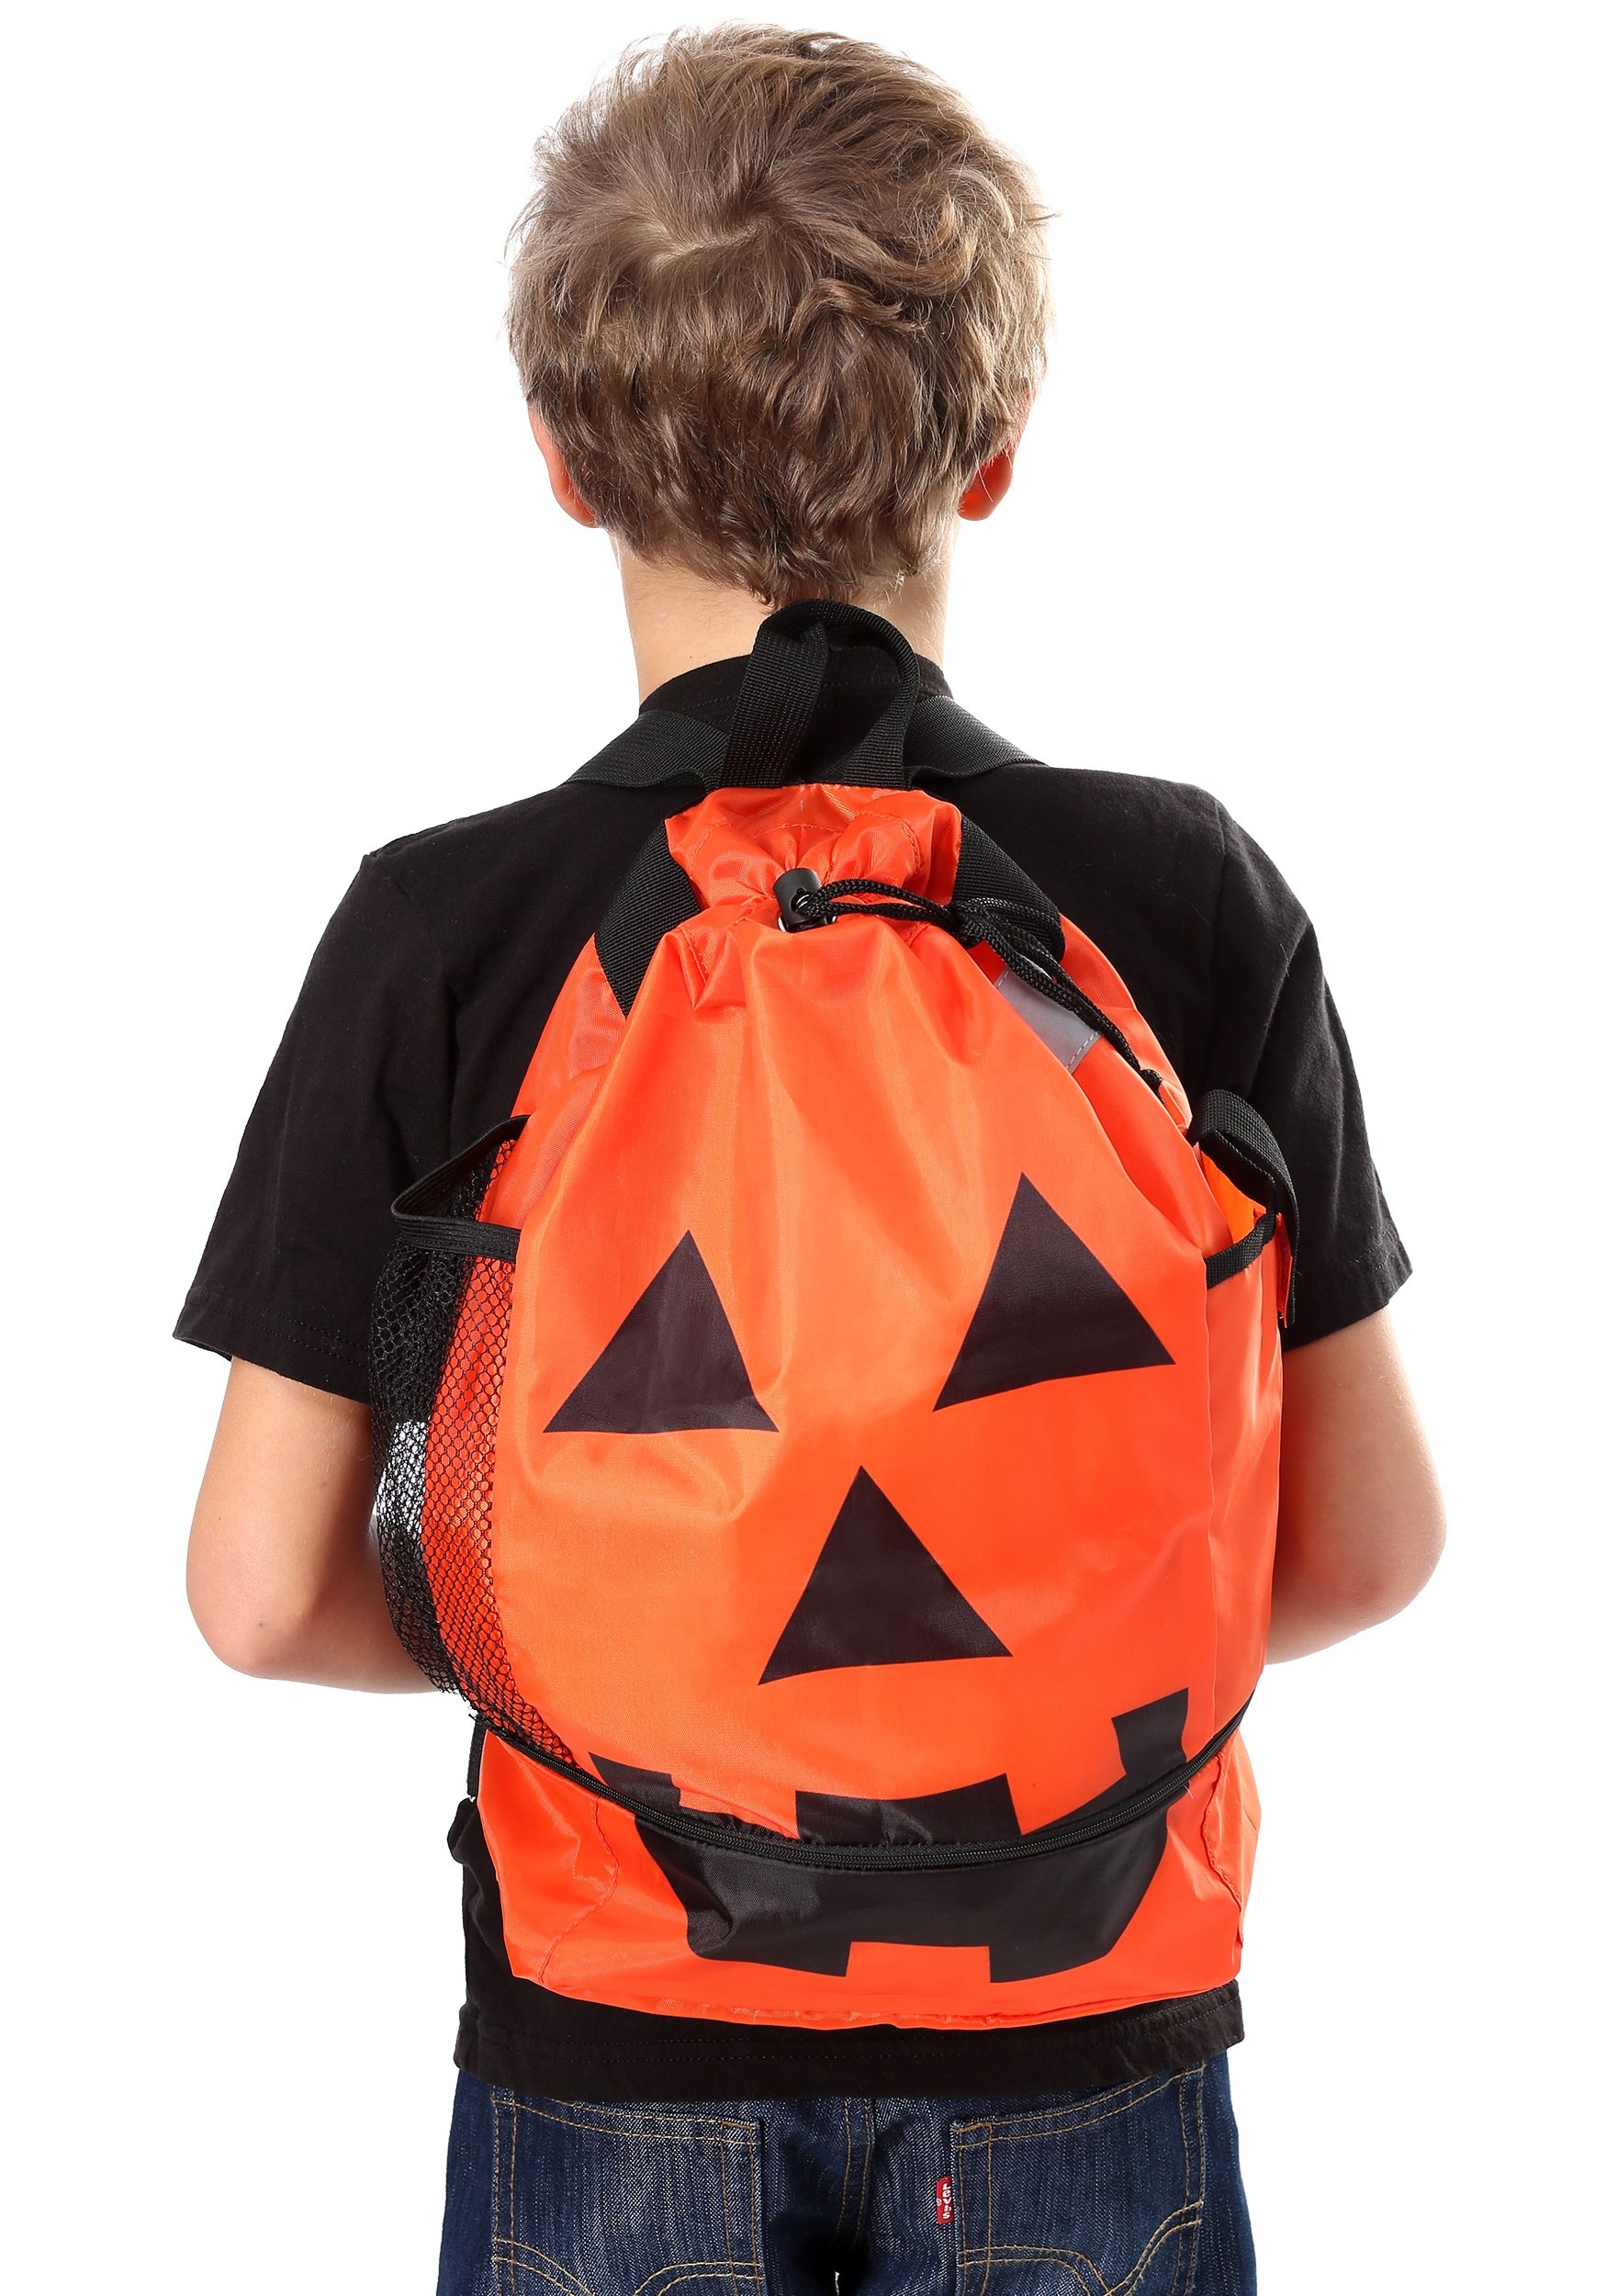 Jack O’Lantern Treat Bag